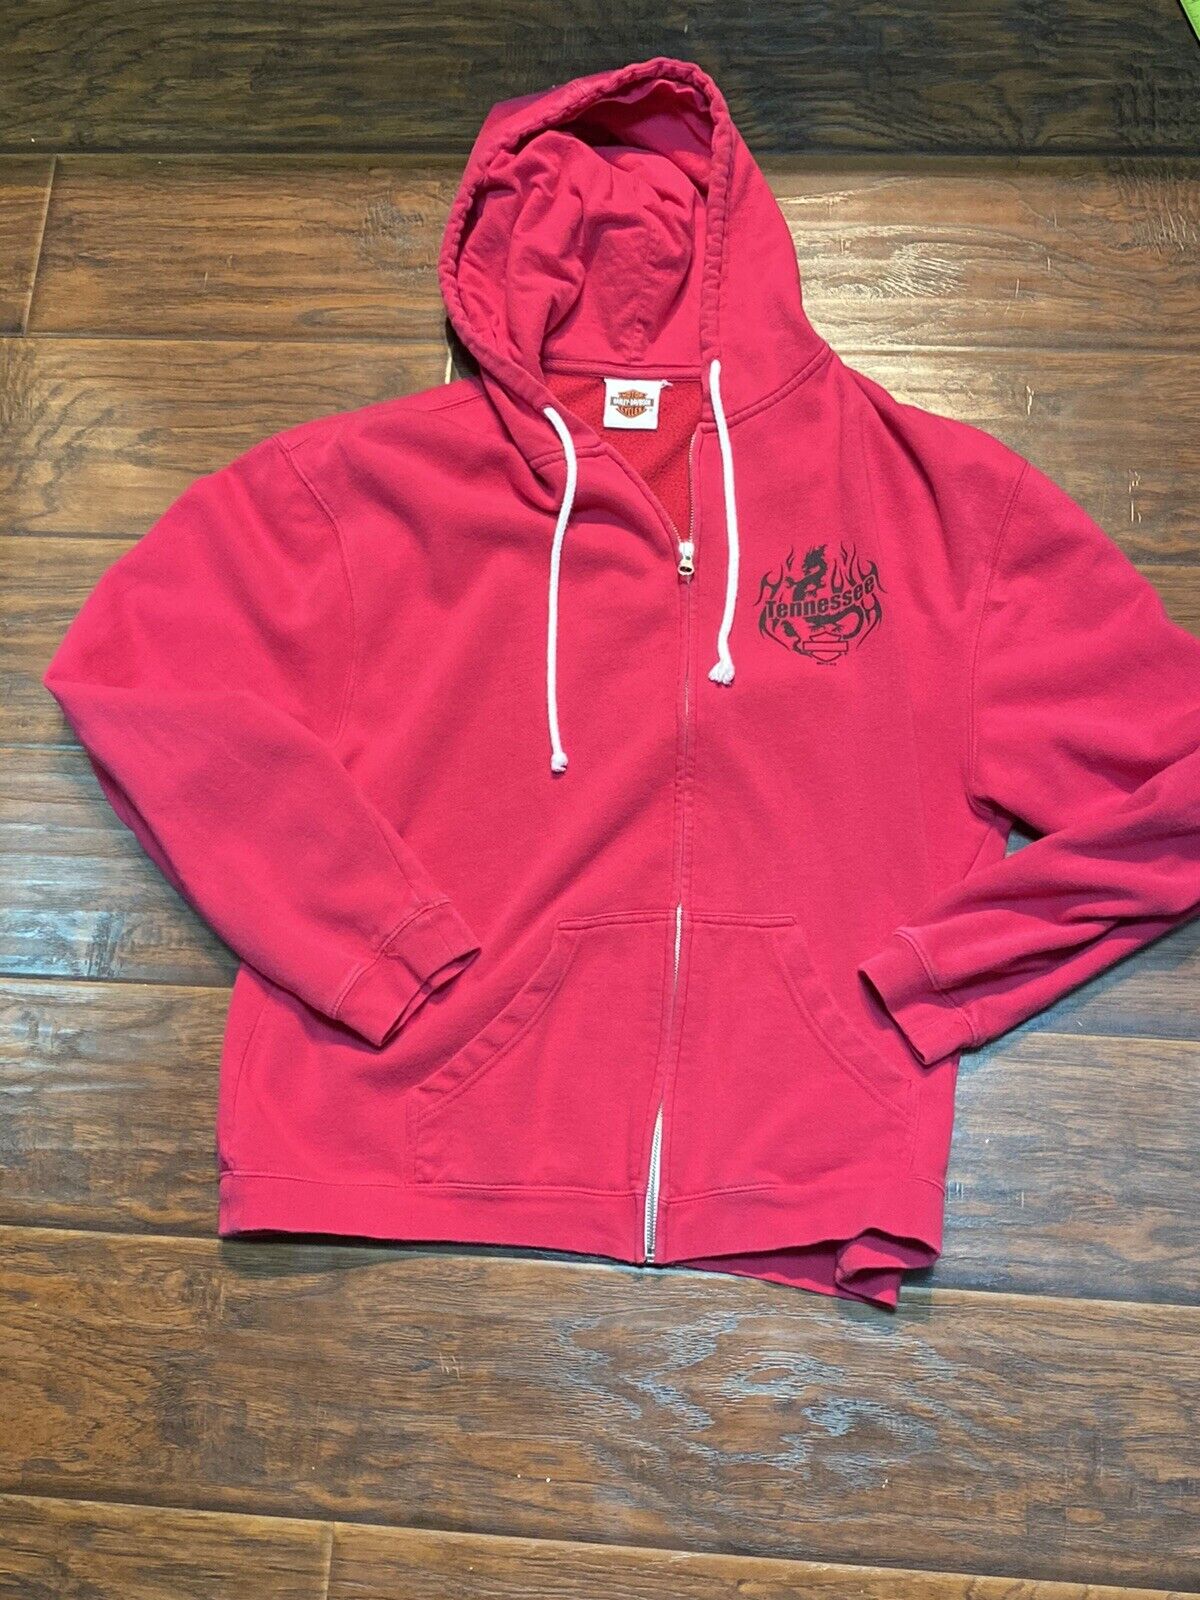 pink full zip Tellico Plains, TN  harley davidson hoodie size adult large